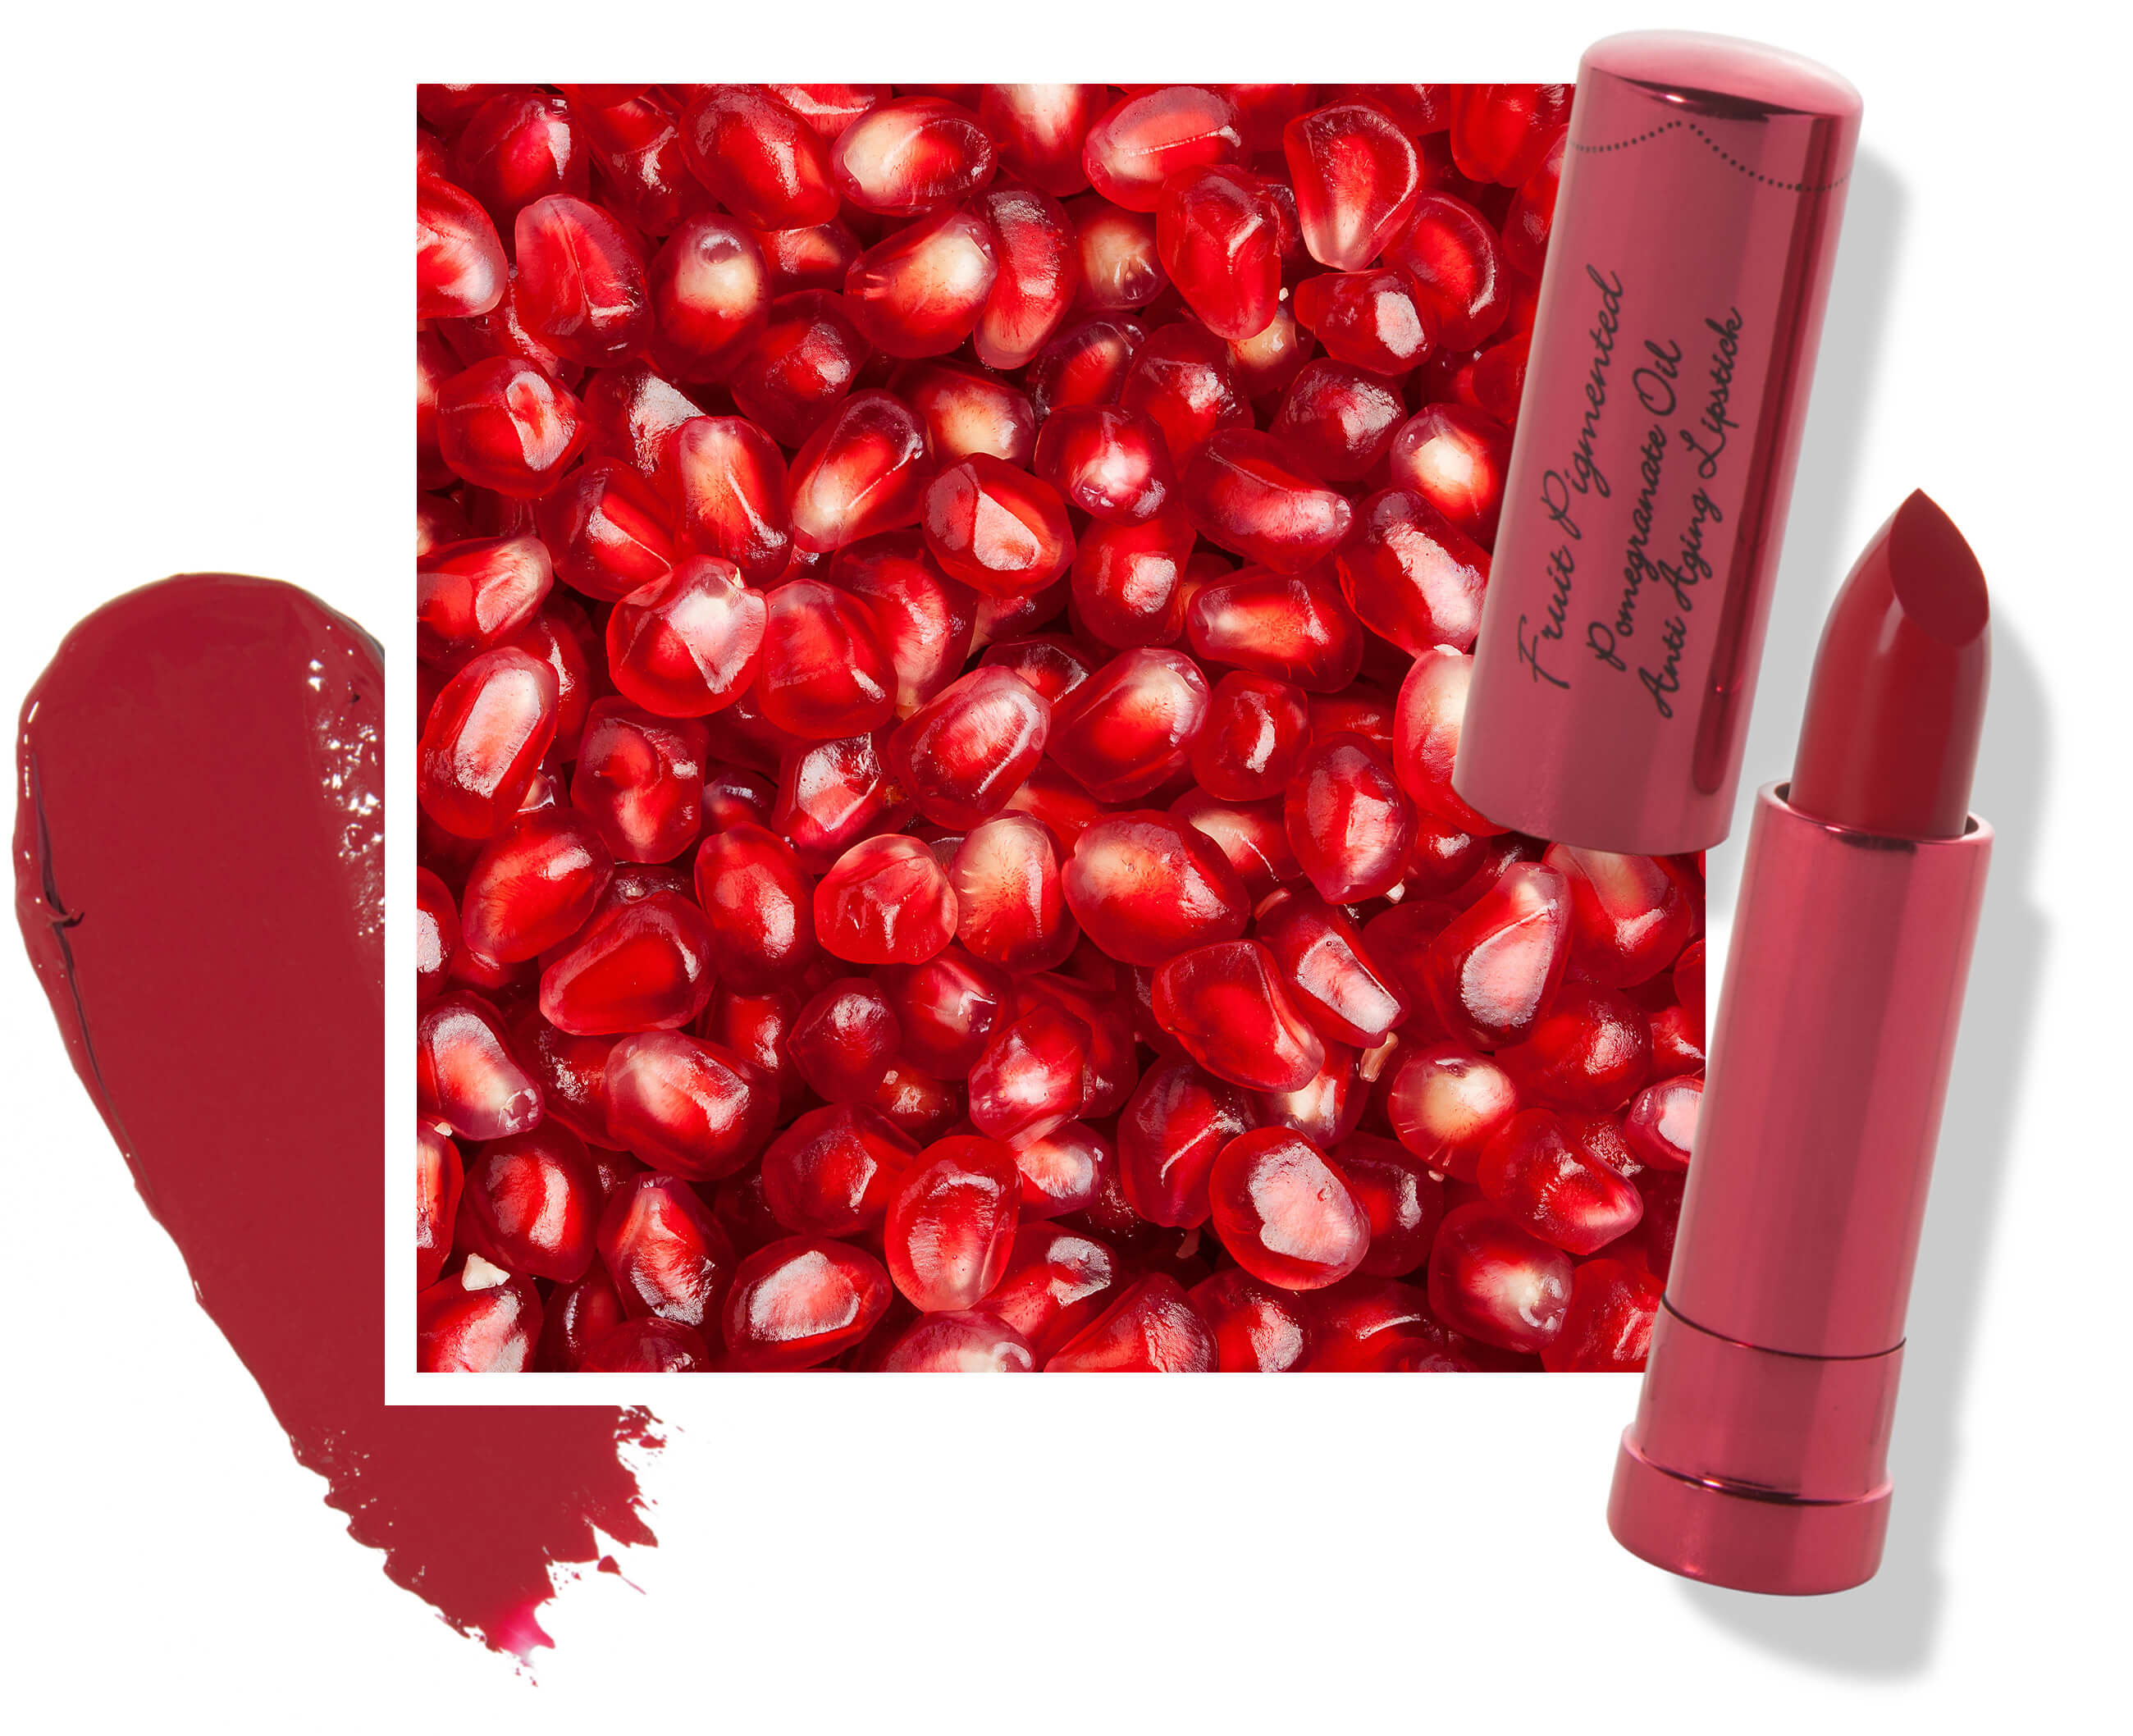 100% Pure Pomegranate Lipstick and pomegranate seeds